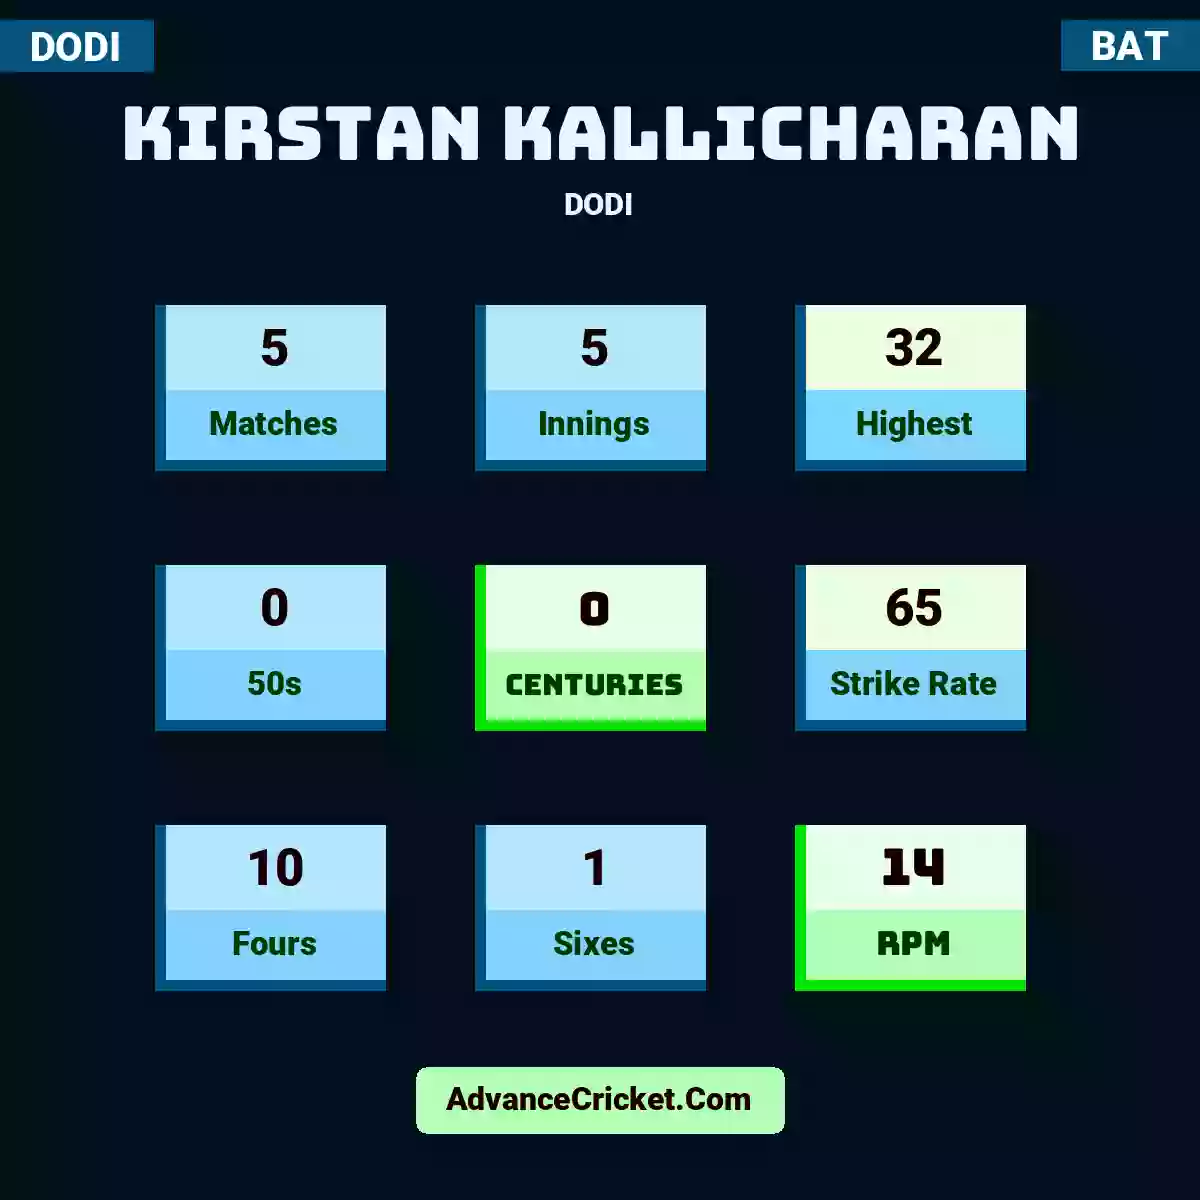 Kirstan Kallicharan DODI , Kirstan Kallicharan played 5 matches, scored 32 runs as highest, 0 half-centuries, and 0 centuries, with a strike rate of 65. K.Kallicharan hit 10 fours and 1 sixes, with an RPM of 14.